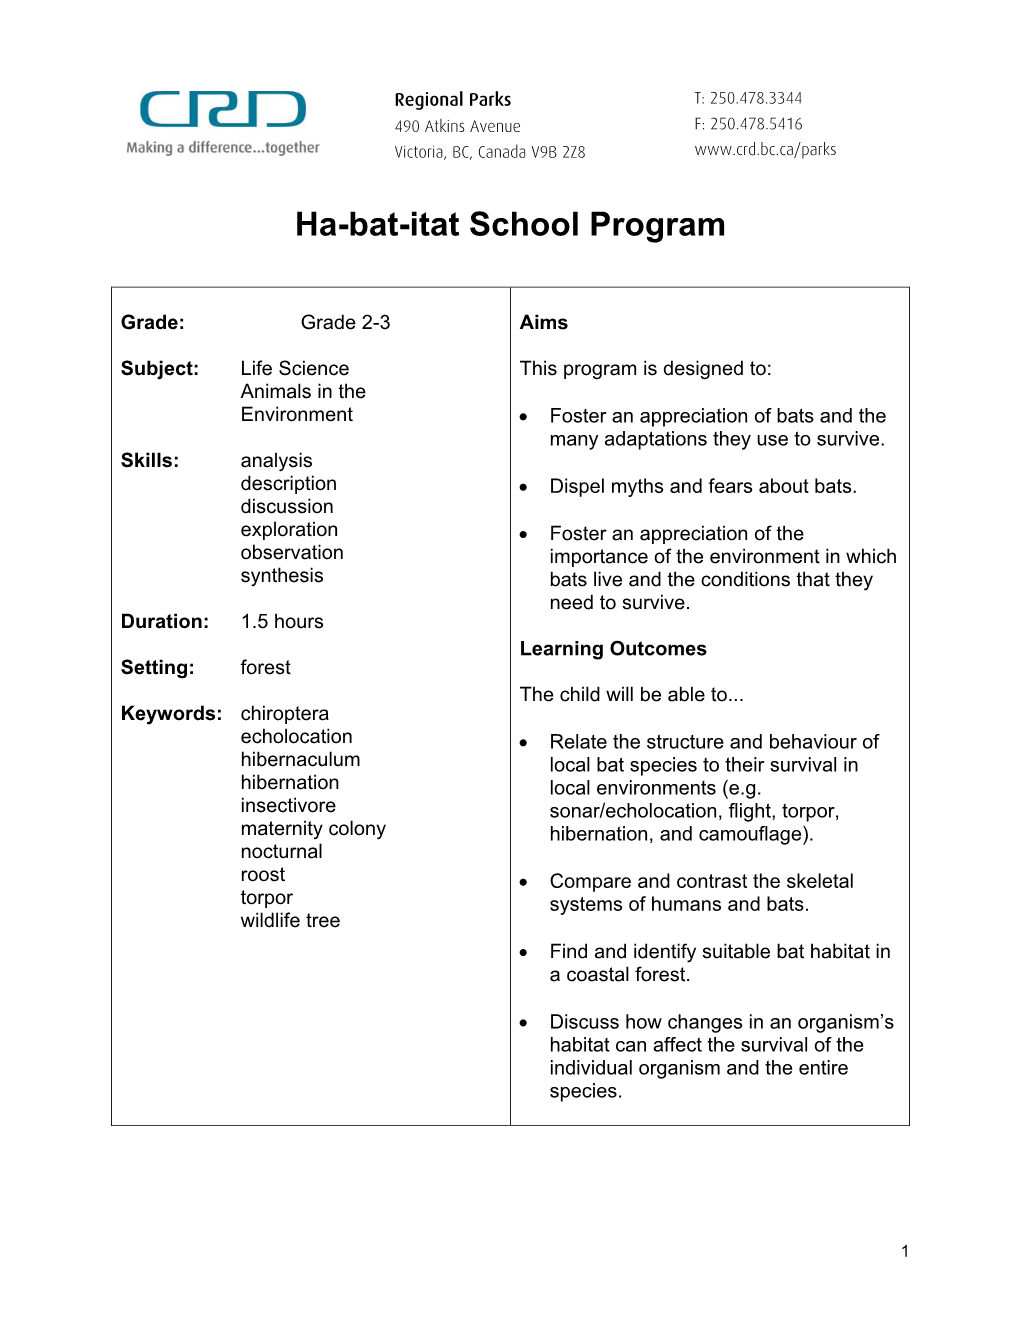 Ha-Bat-Itat School Program